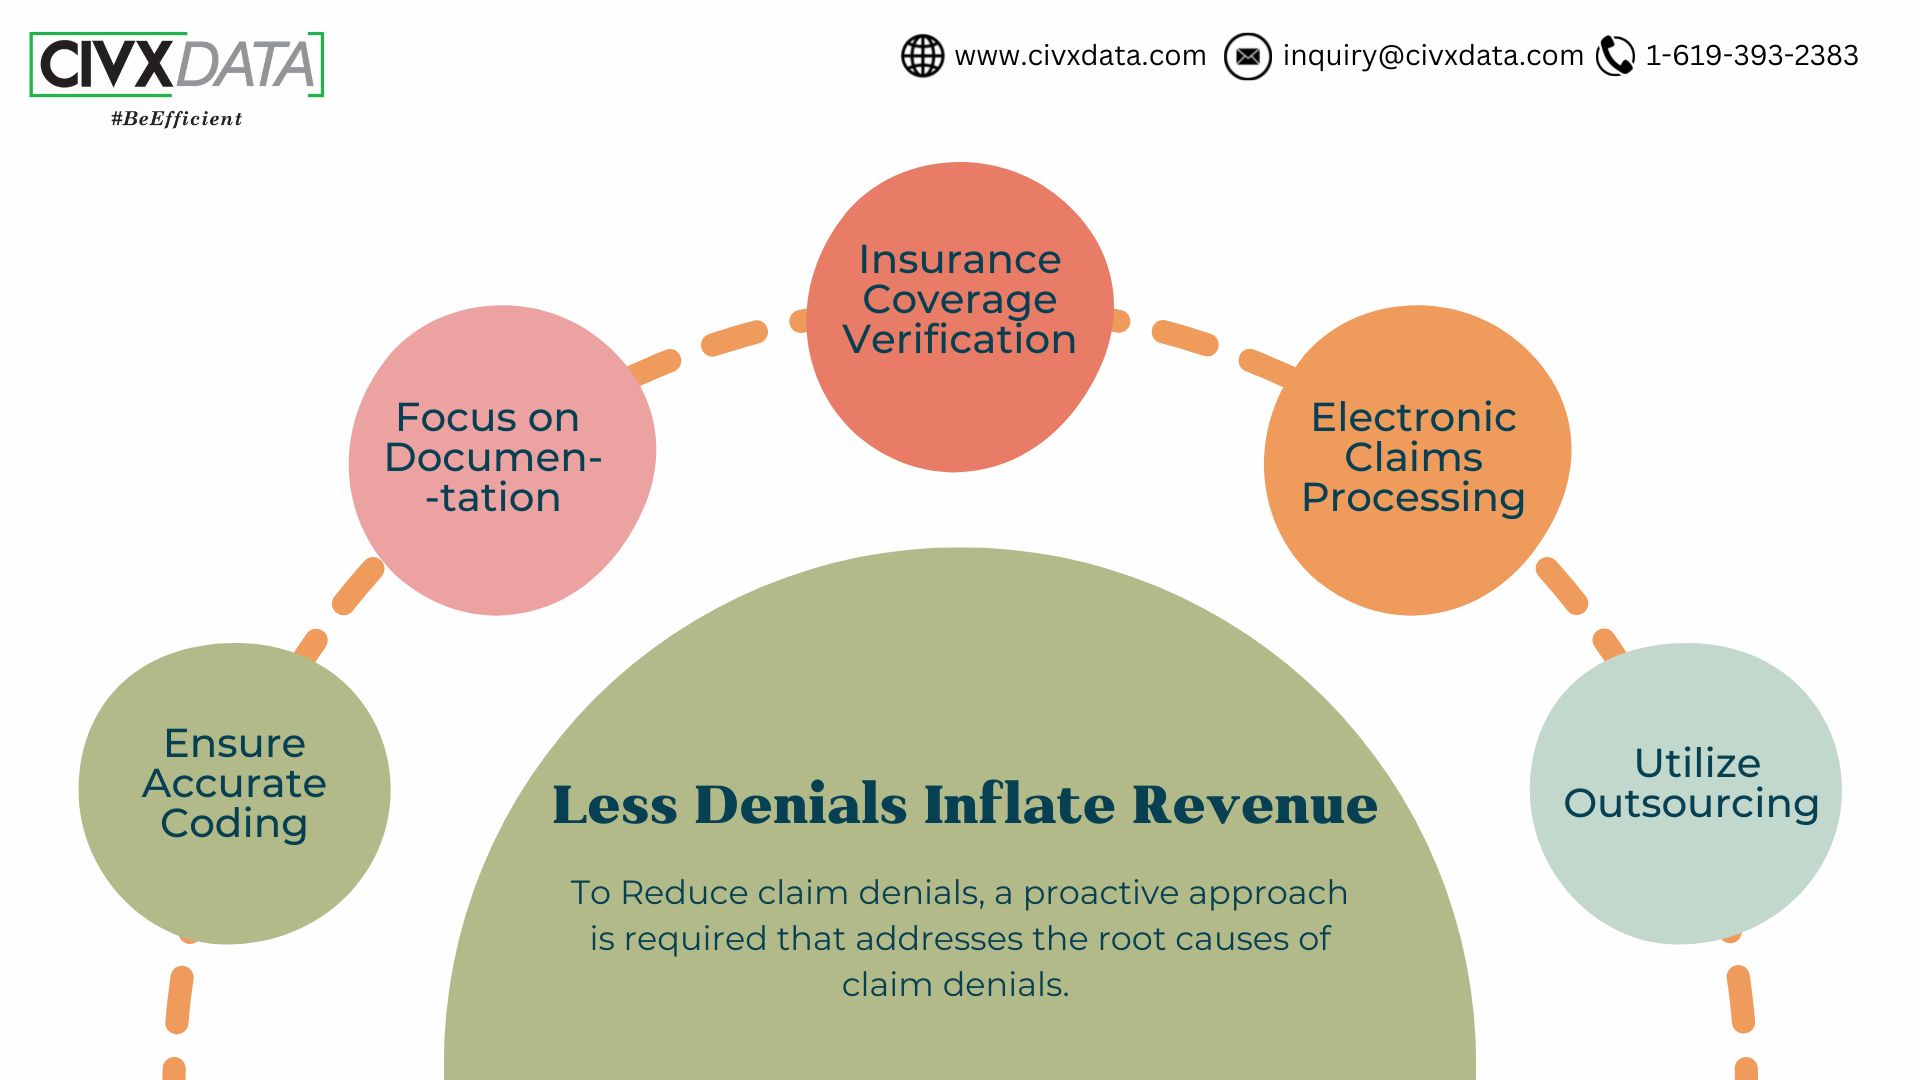 Less denials inflate Revenue